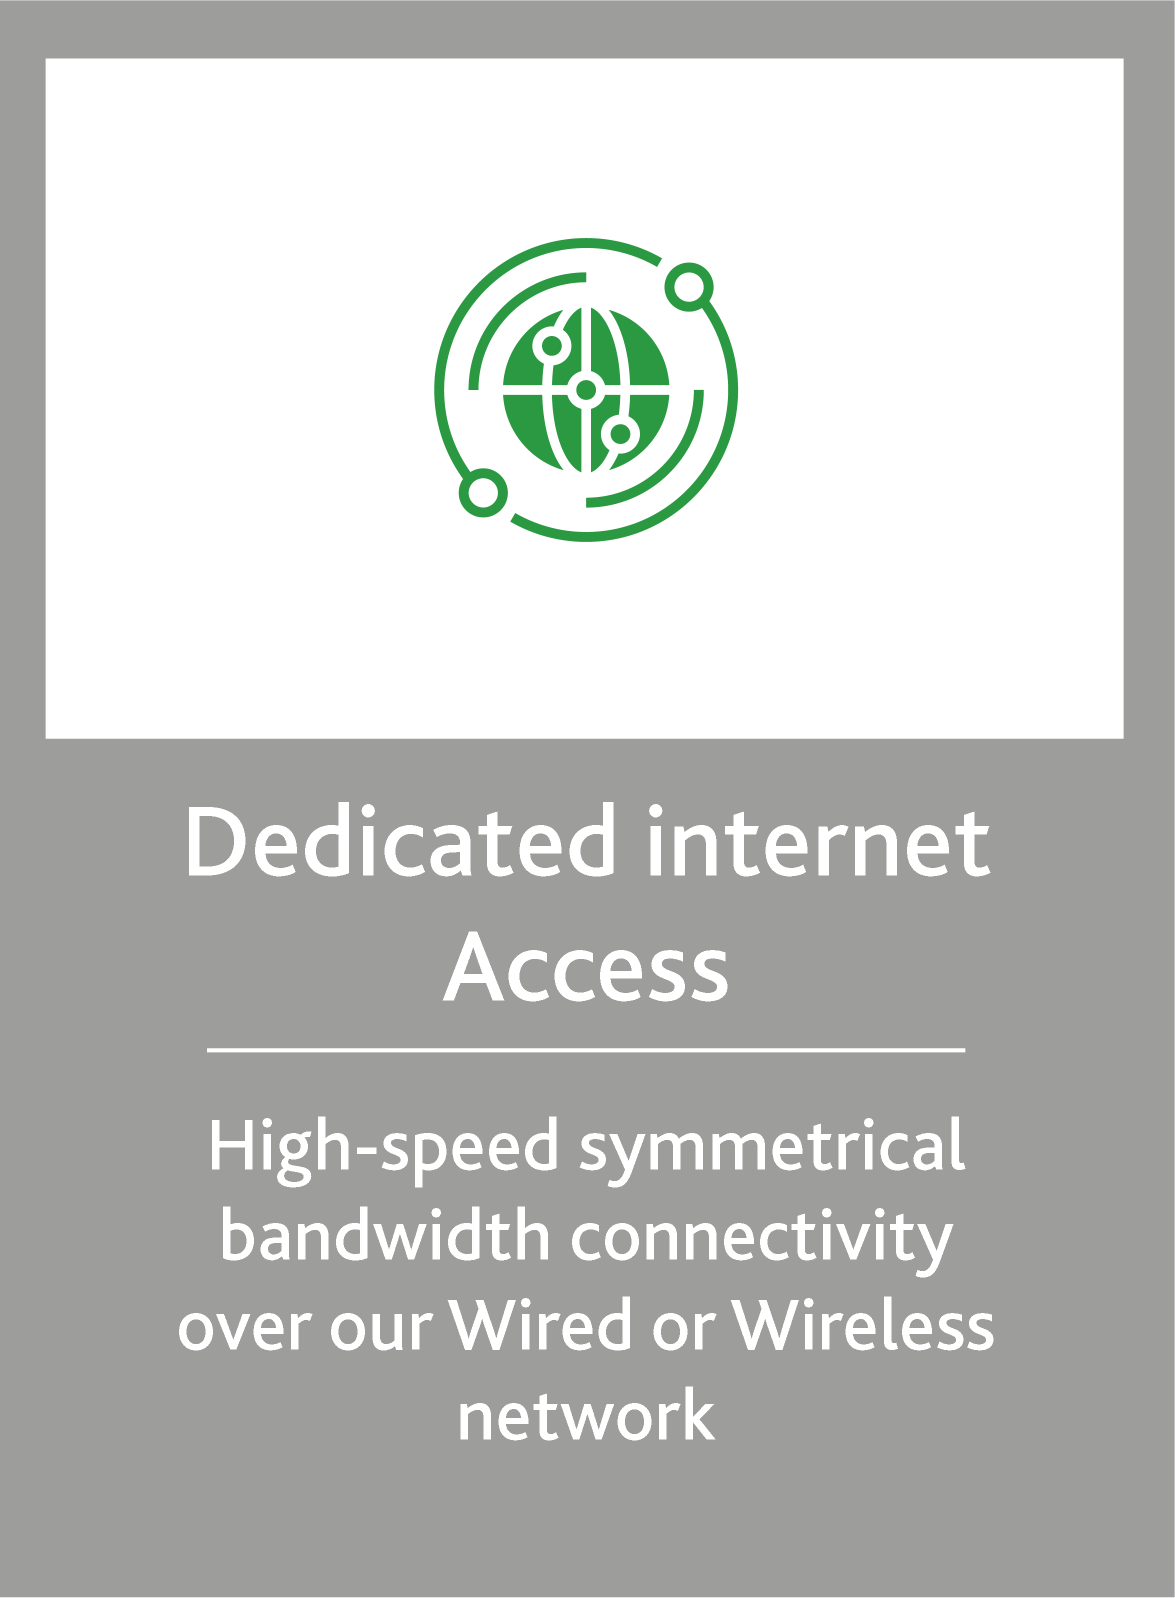 //kalaam-telecom.com/wp-content/uploads/2020/03/Dedicated-Internet-Access.png